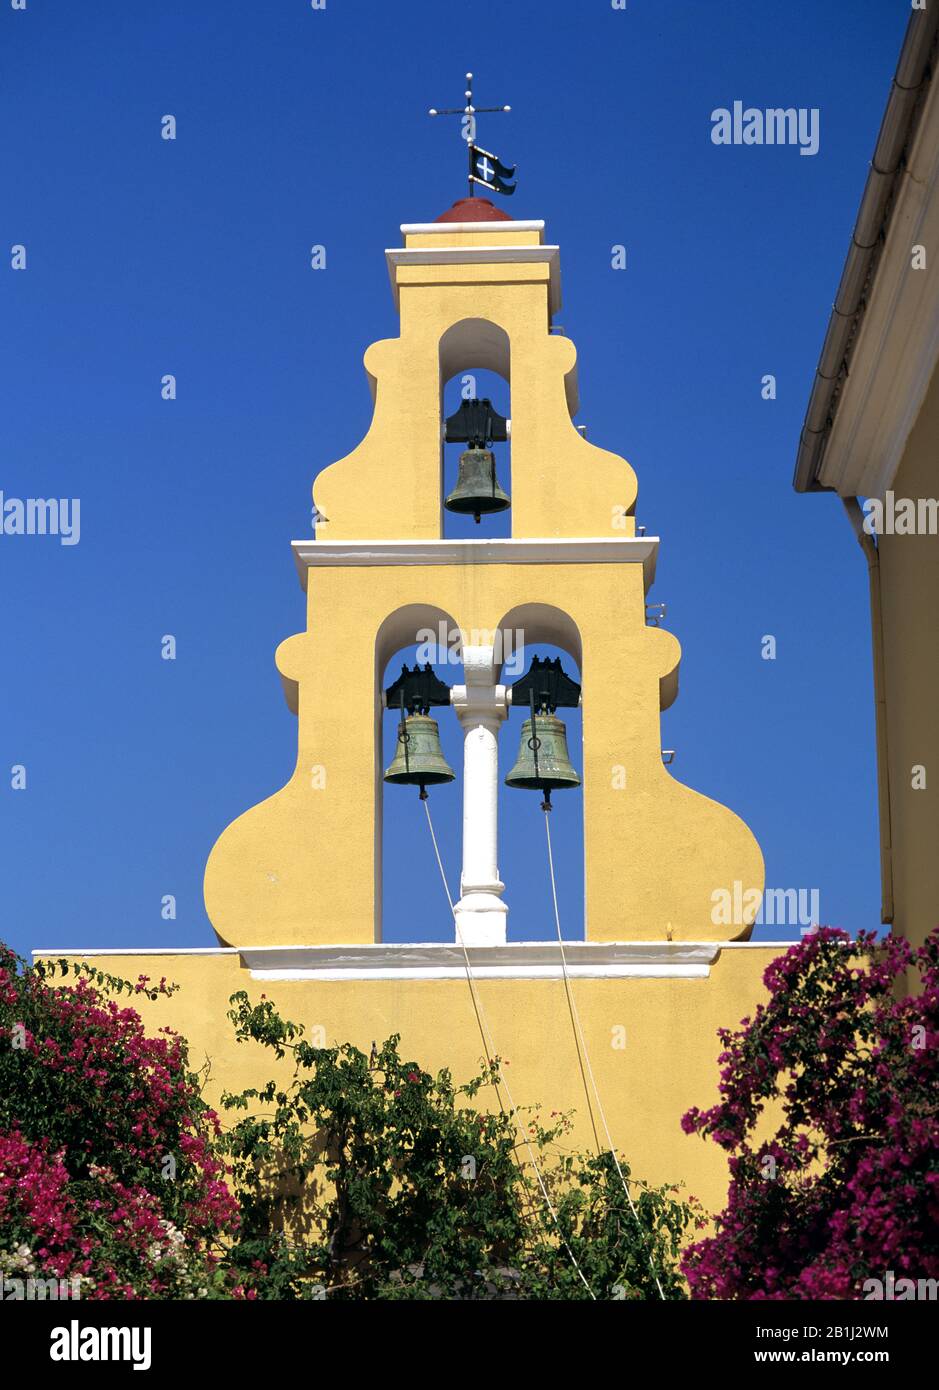 Kloster, Griechenland, Insel Korfu Foto Stock